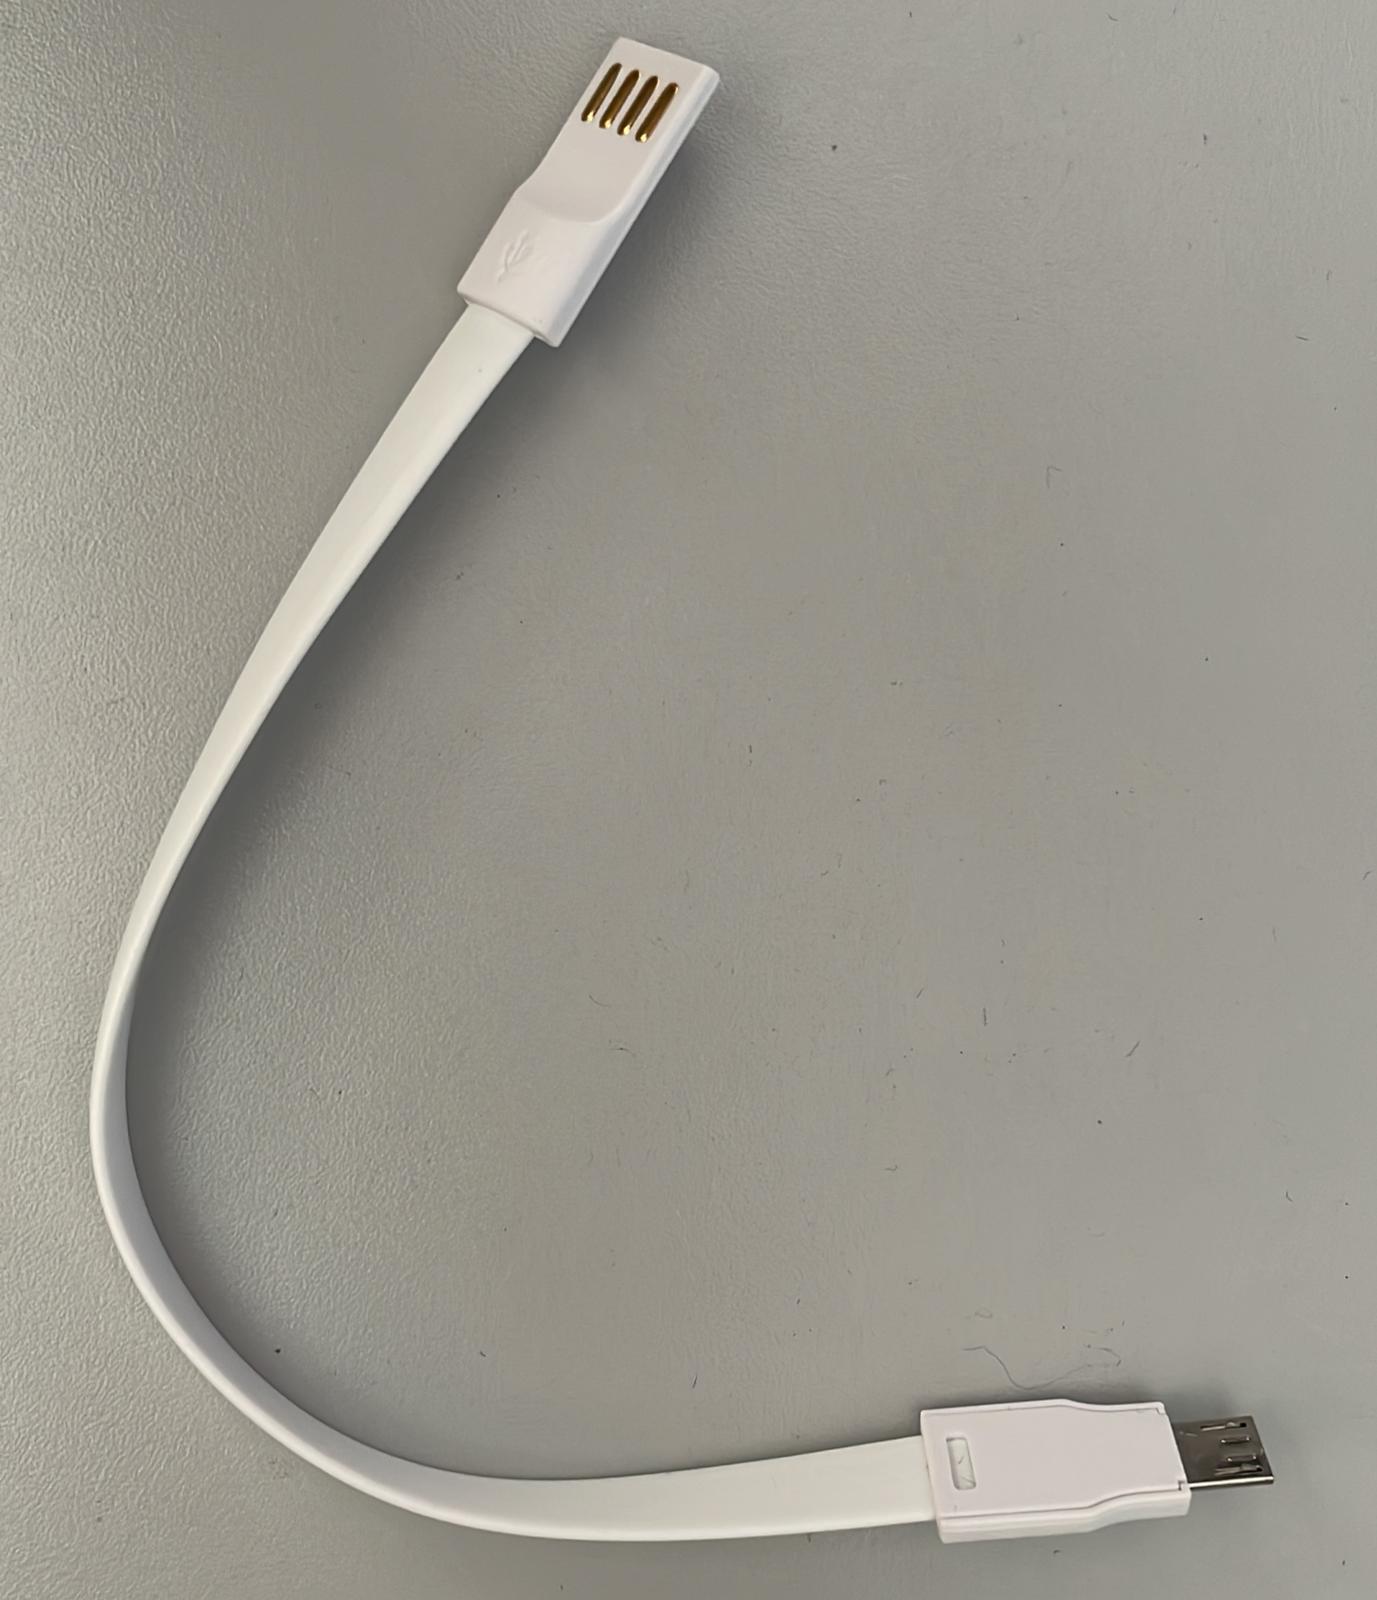 BTEK Câble micro USB vers Micro USB 23cm Blanc